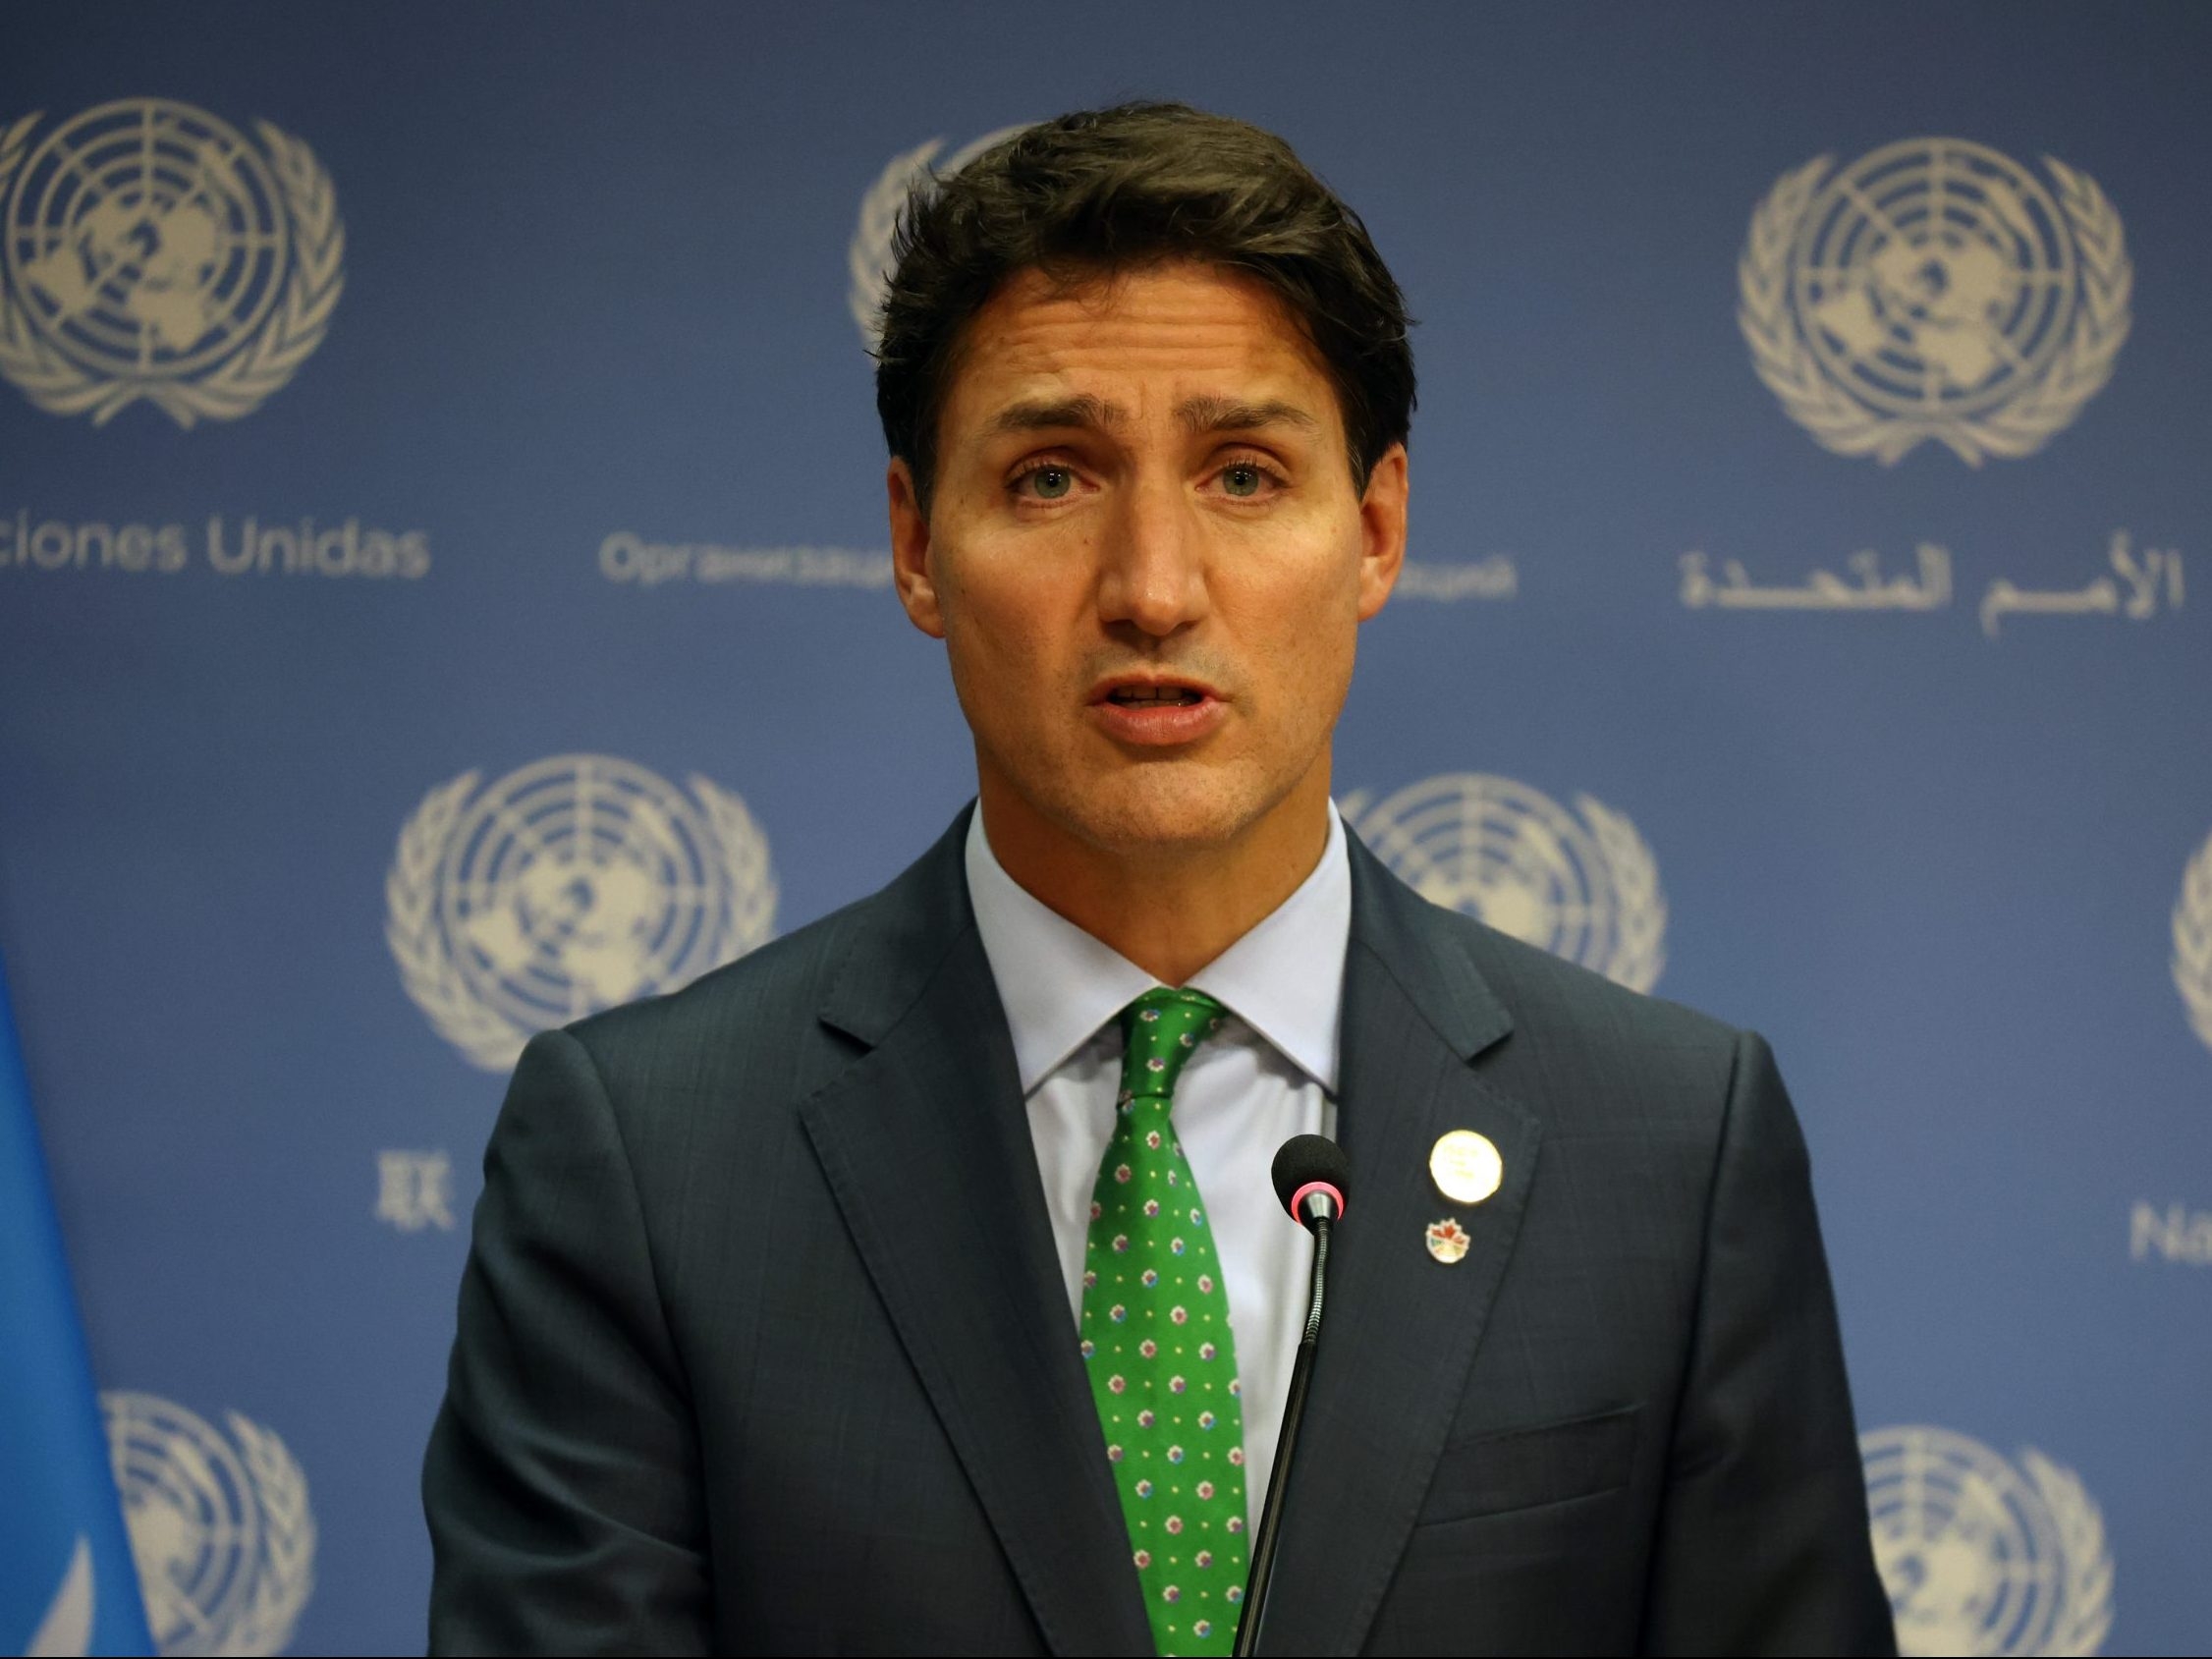 GUNTER: Trudeau travels the world, while regular Canadians struggle